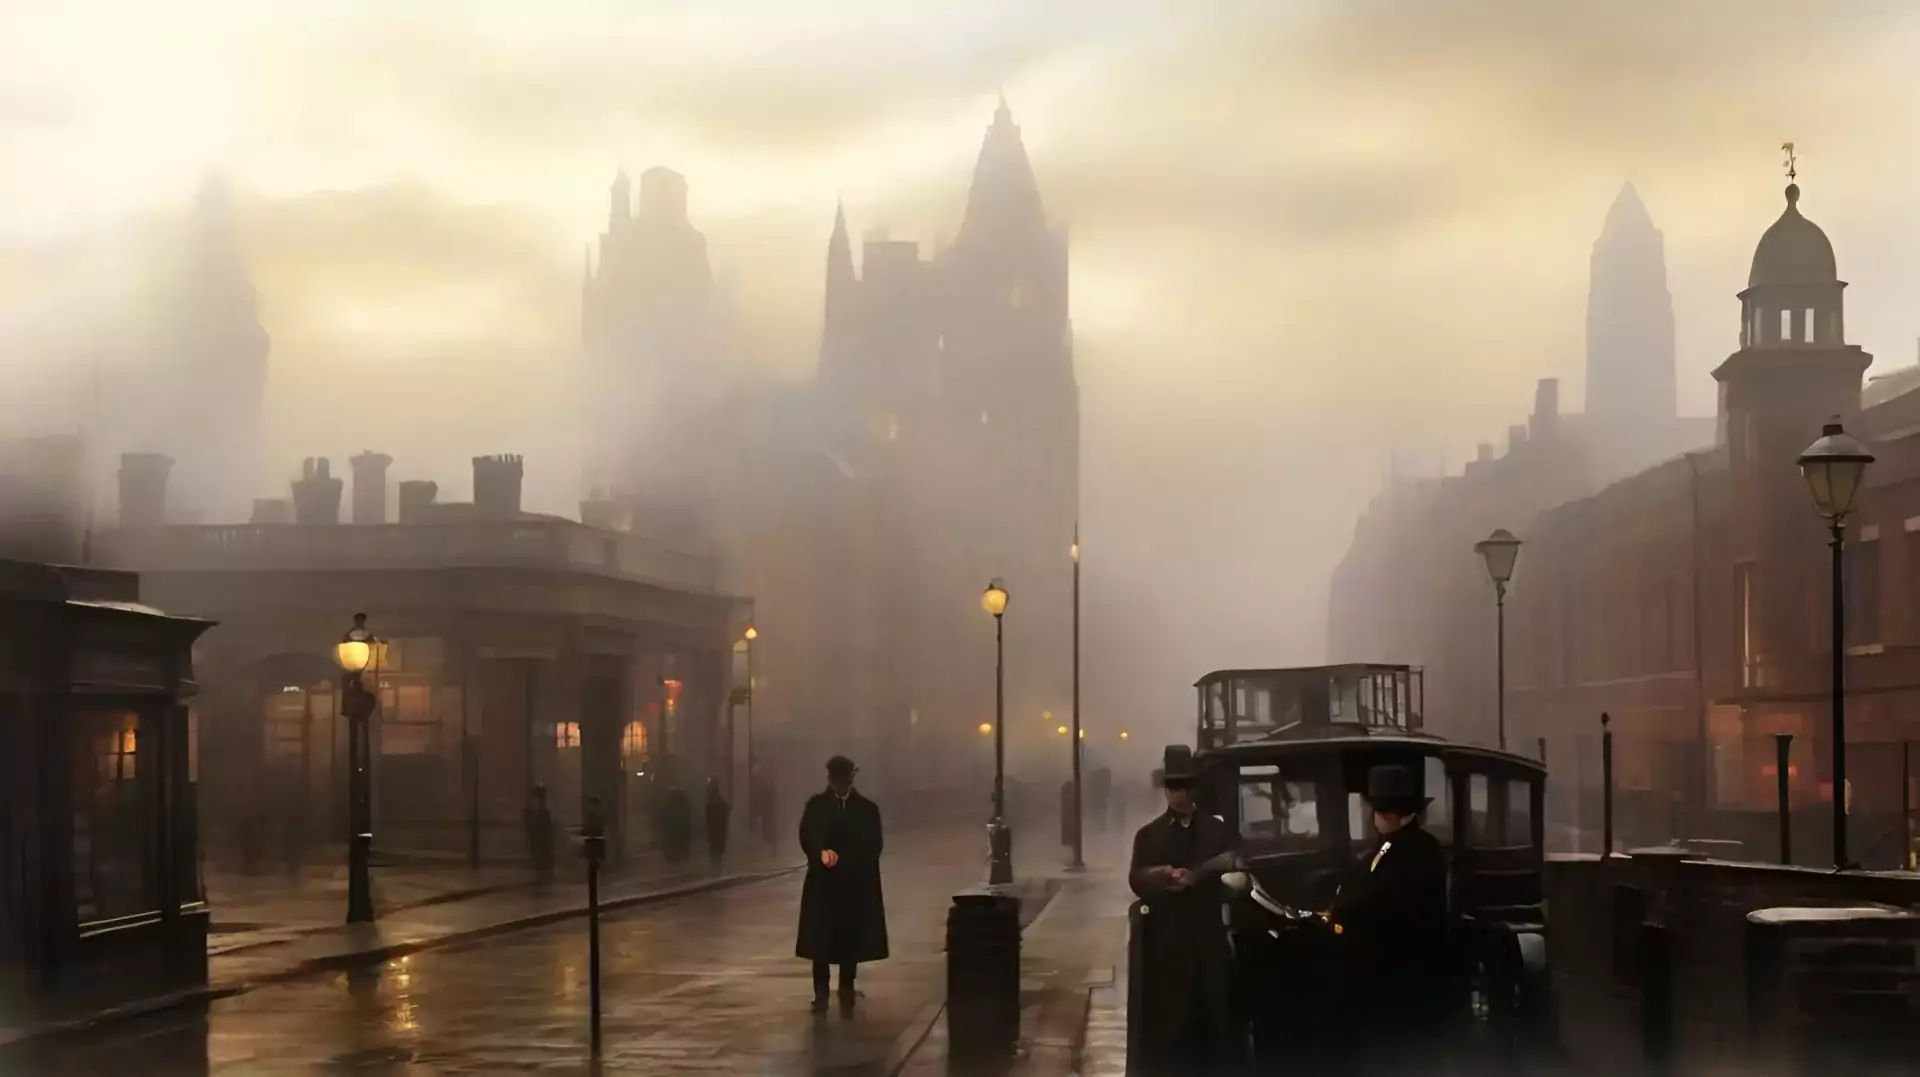 Old city of London 1925 2 1 1 jpeg